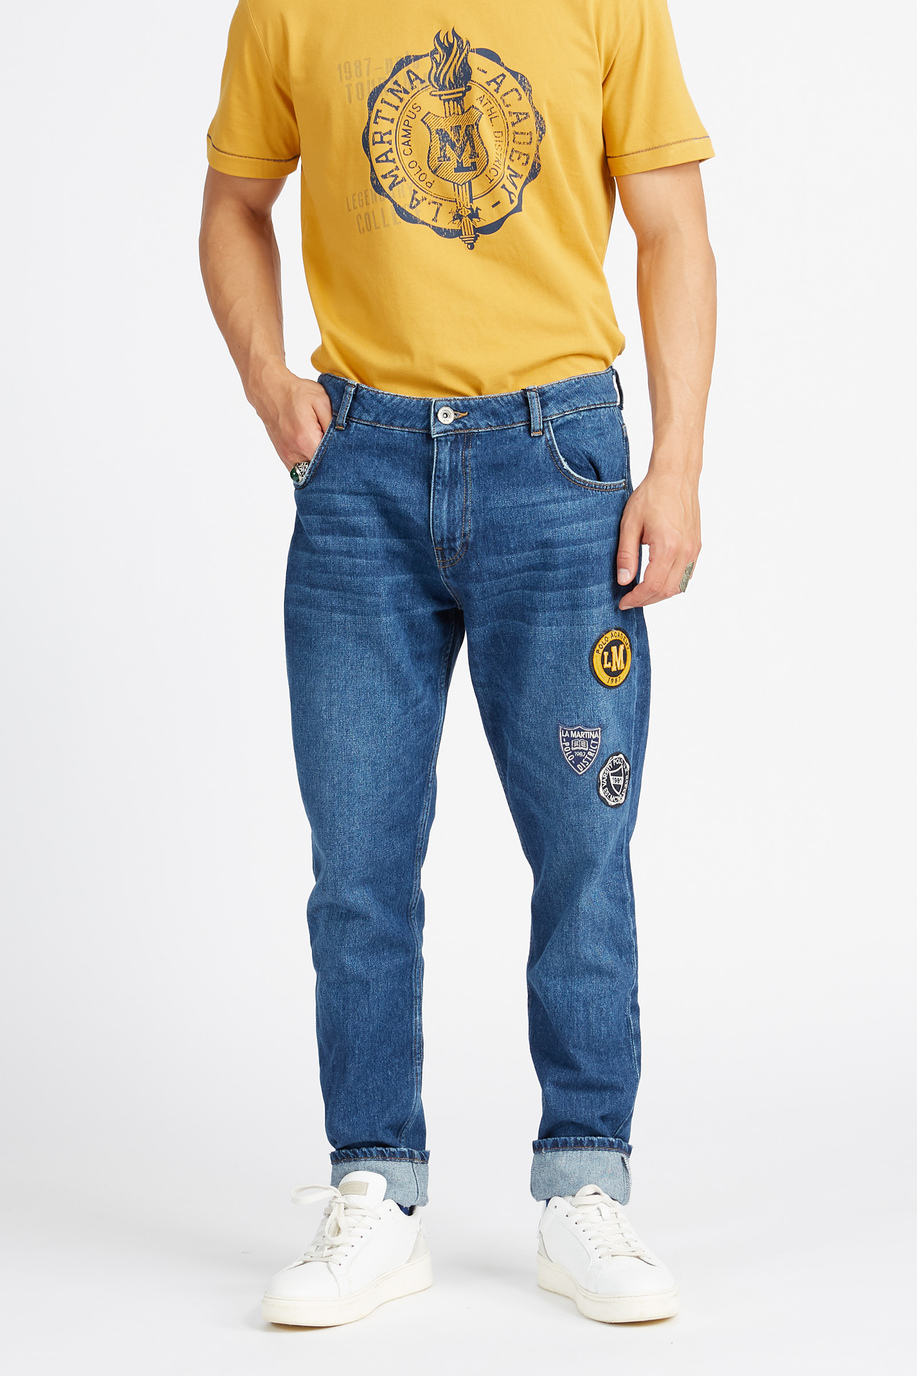 Pantalone jeans denim uomo 5 tasche e multi logo Polo Academy - Viggo - Pantaloni | La Martina - Official Online Shop